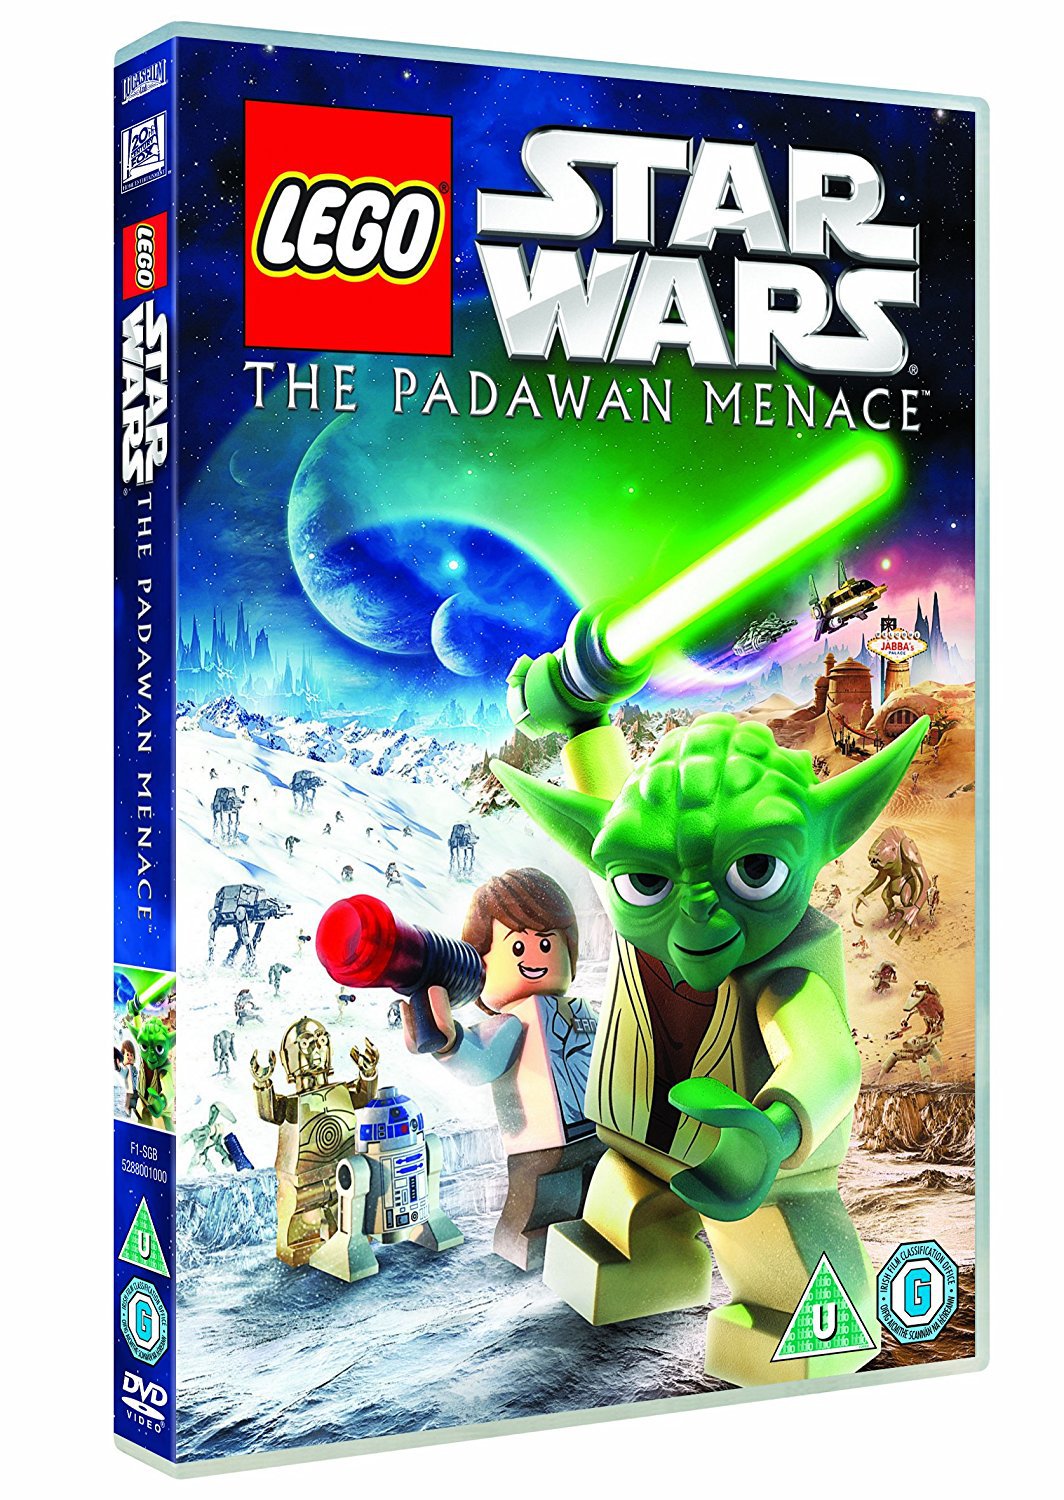 Lego Star Wars: The Padawan Menace #7